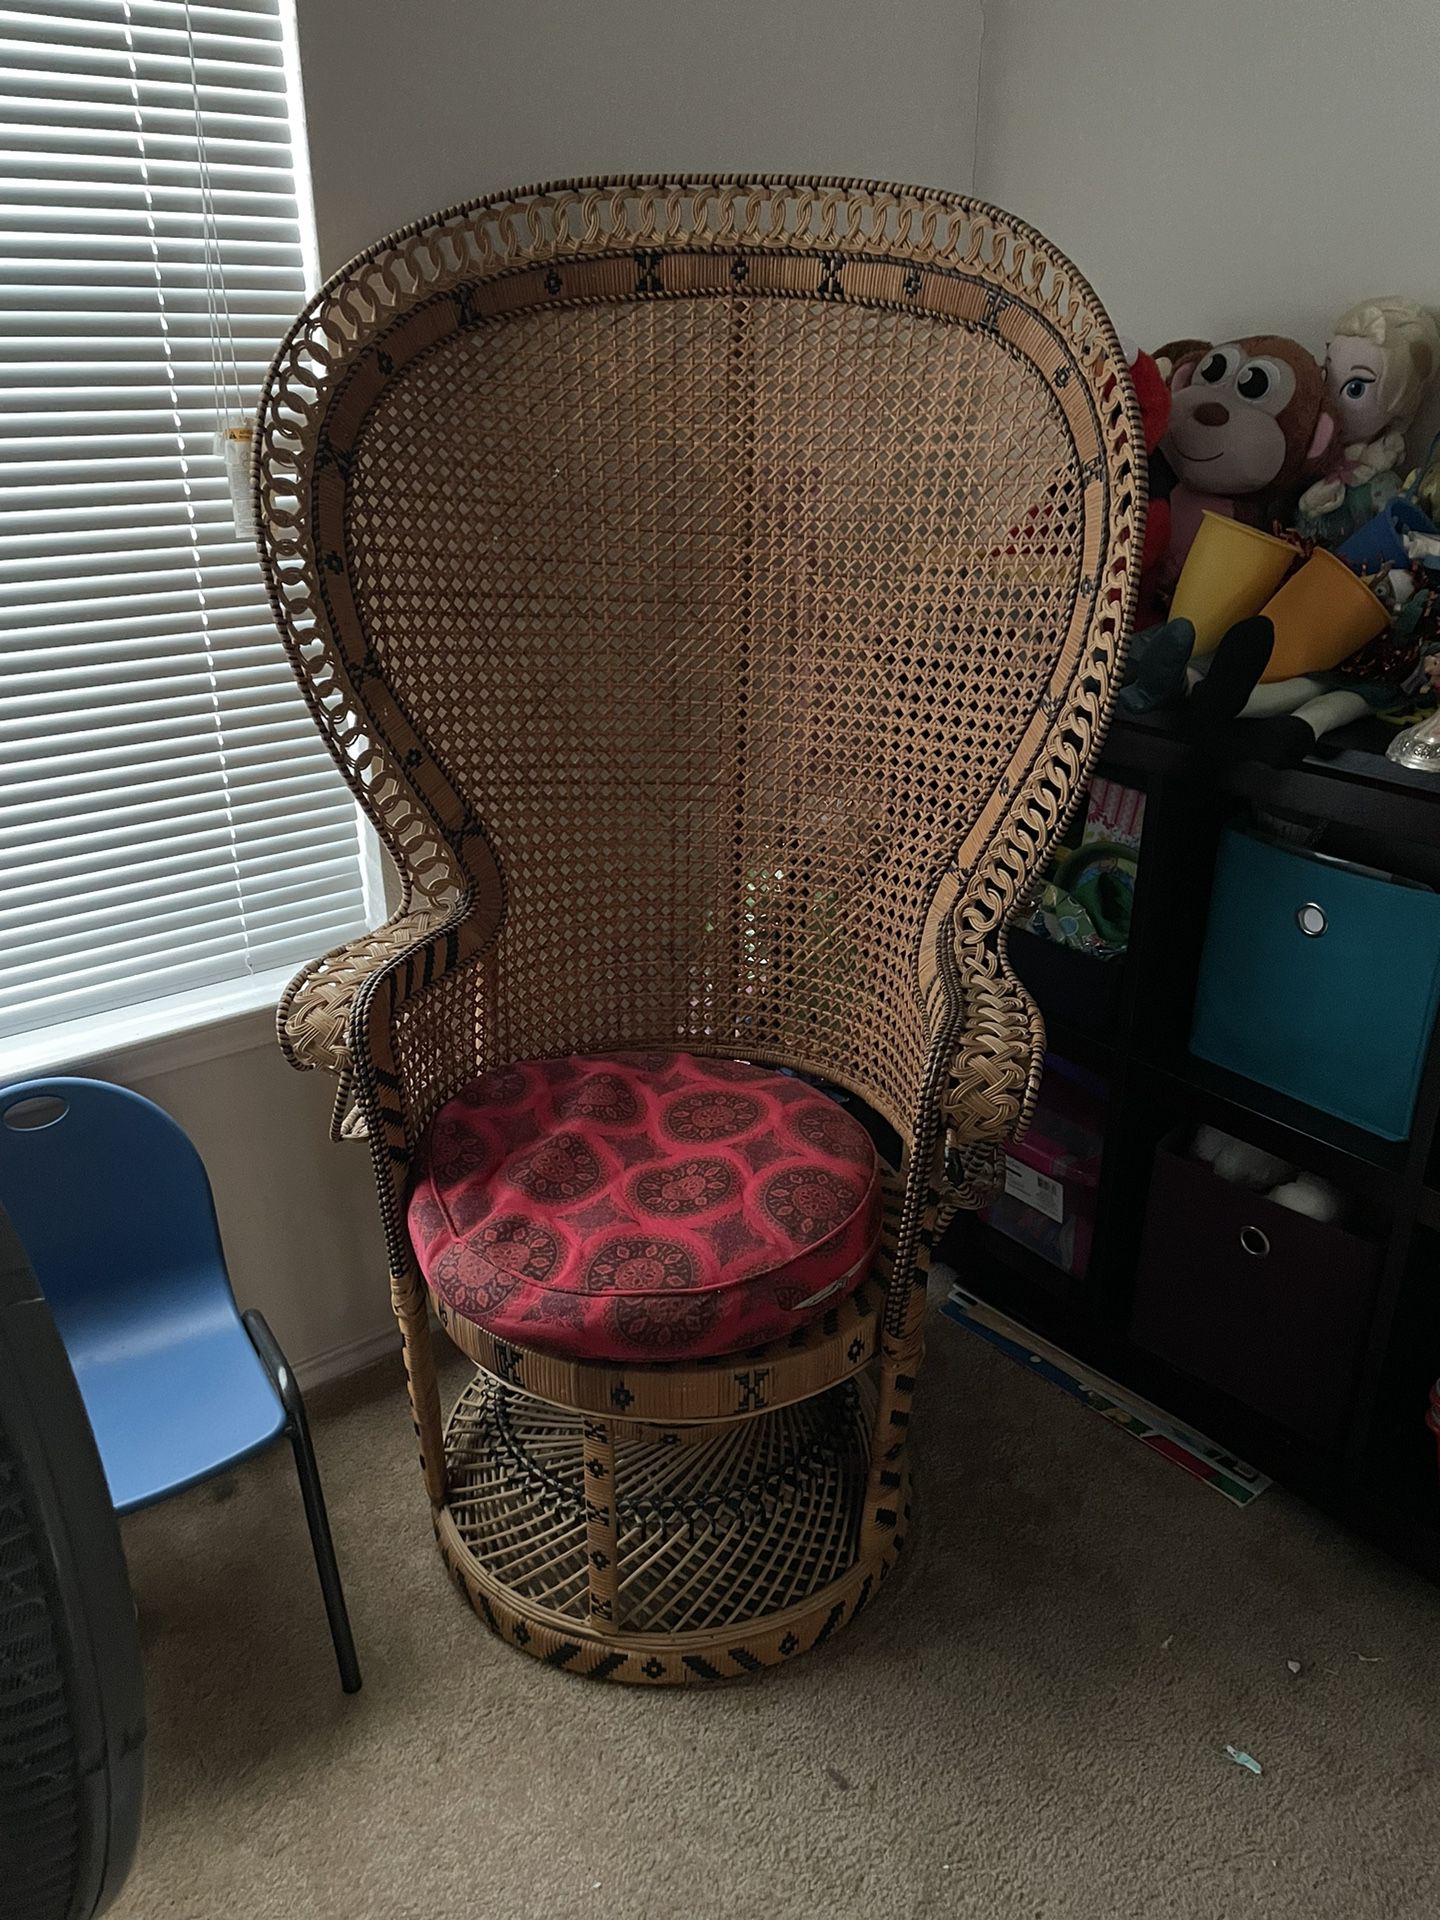 Vintage Peacock Chair